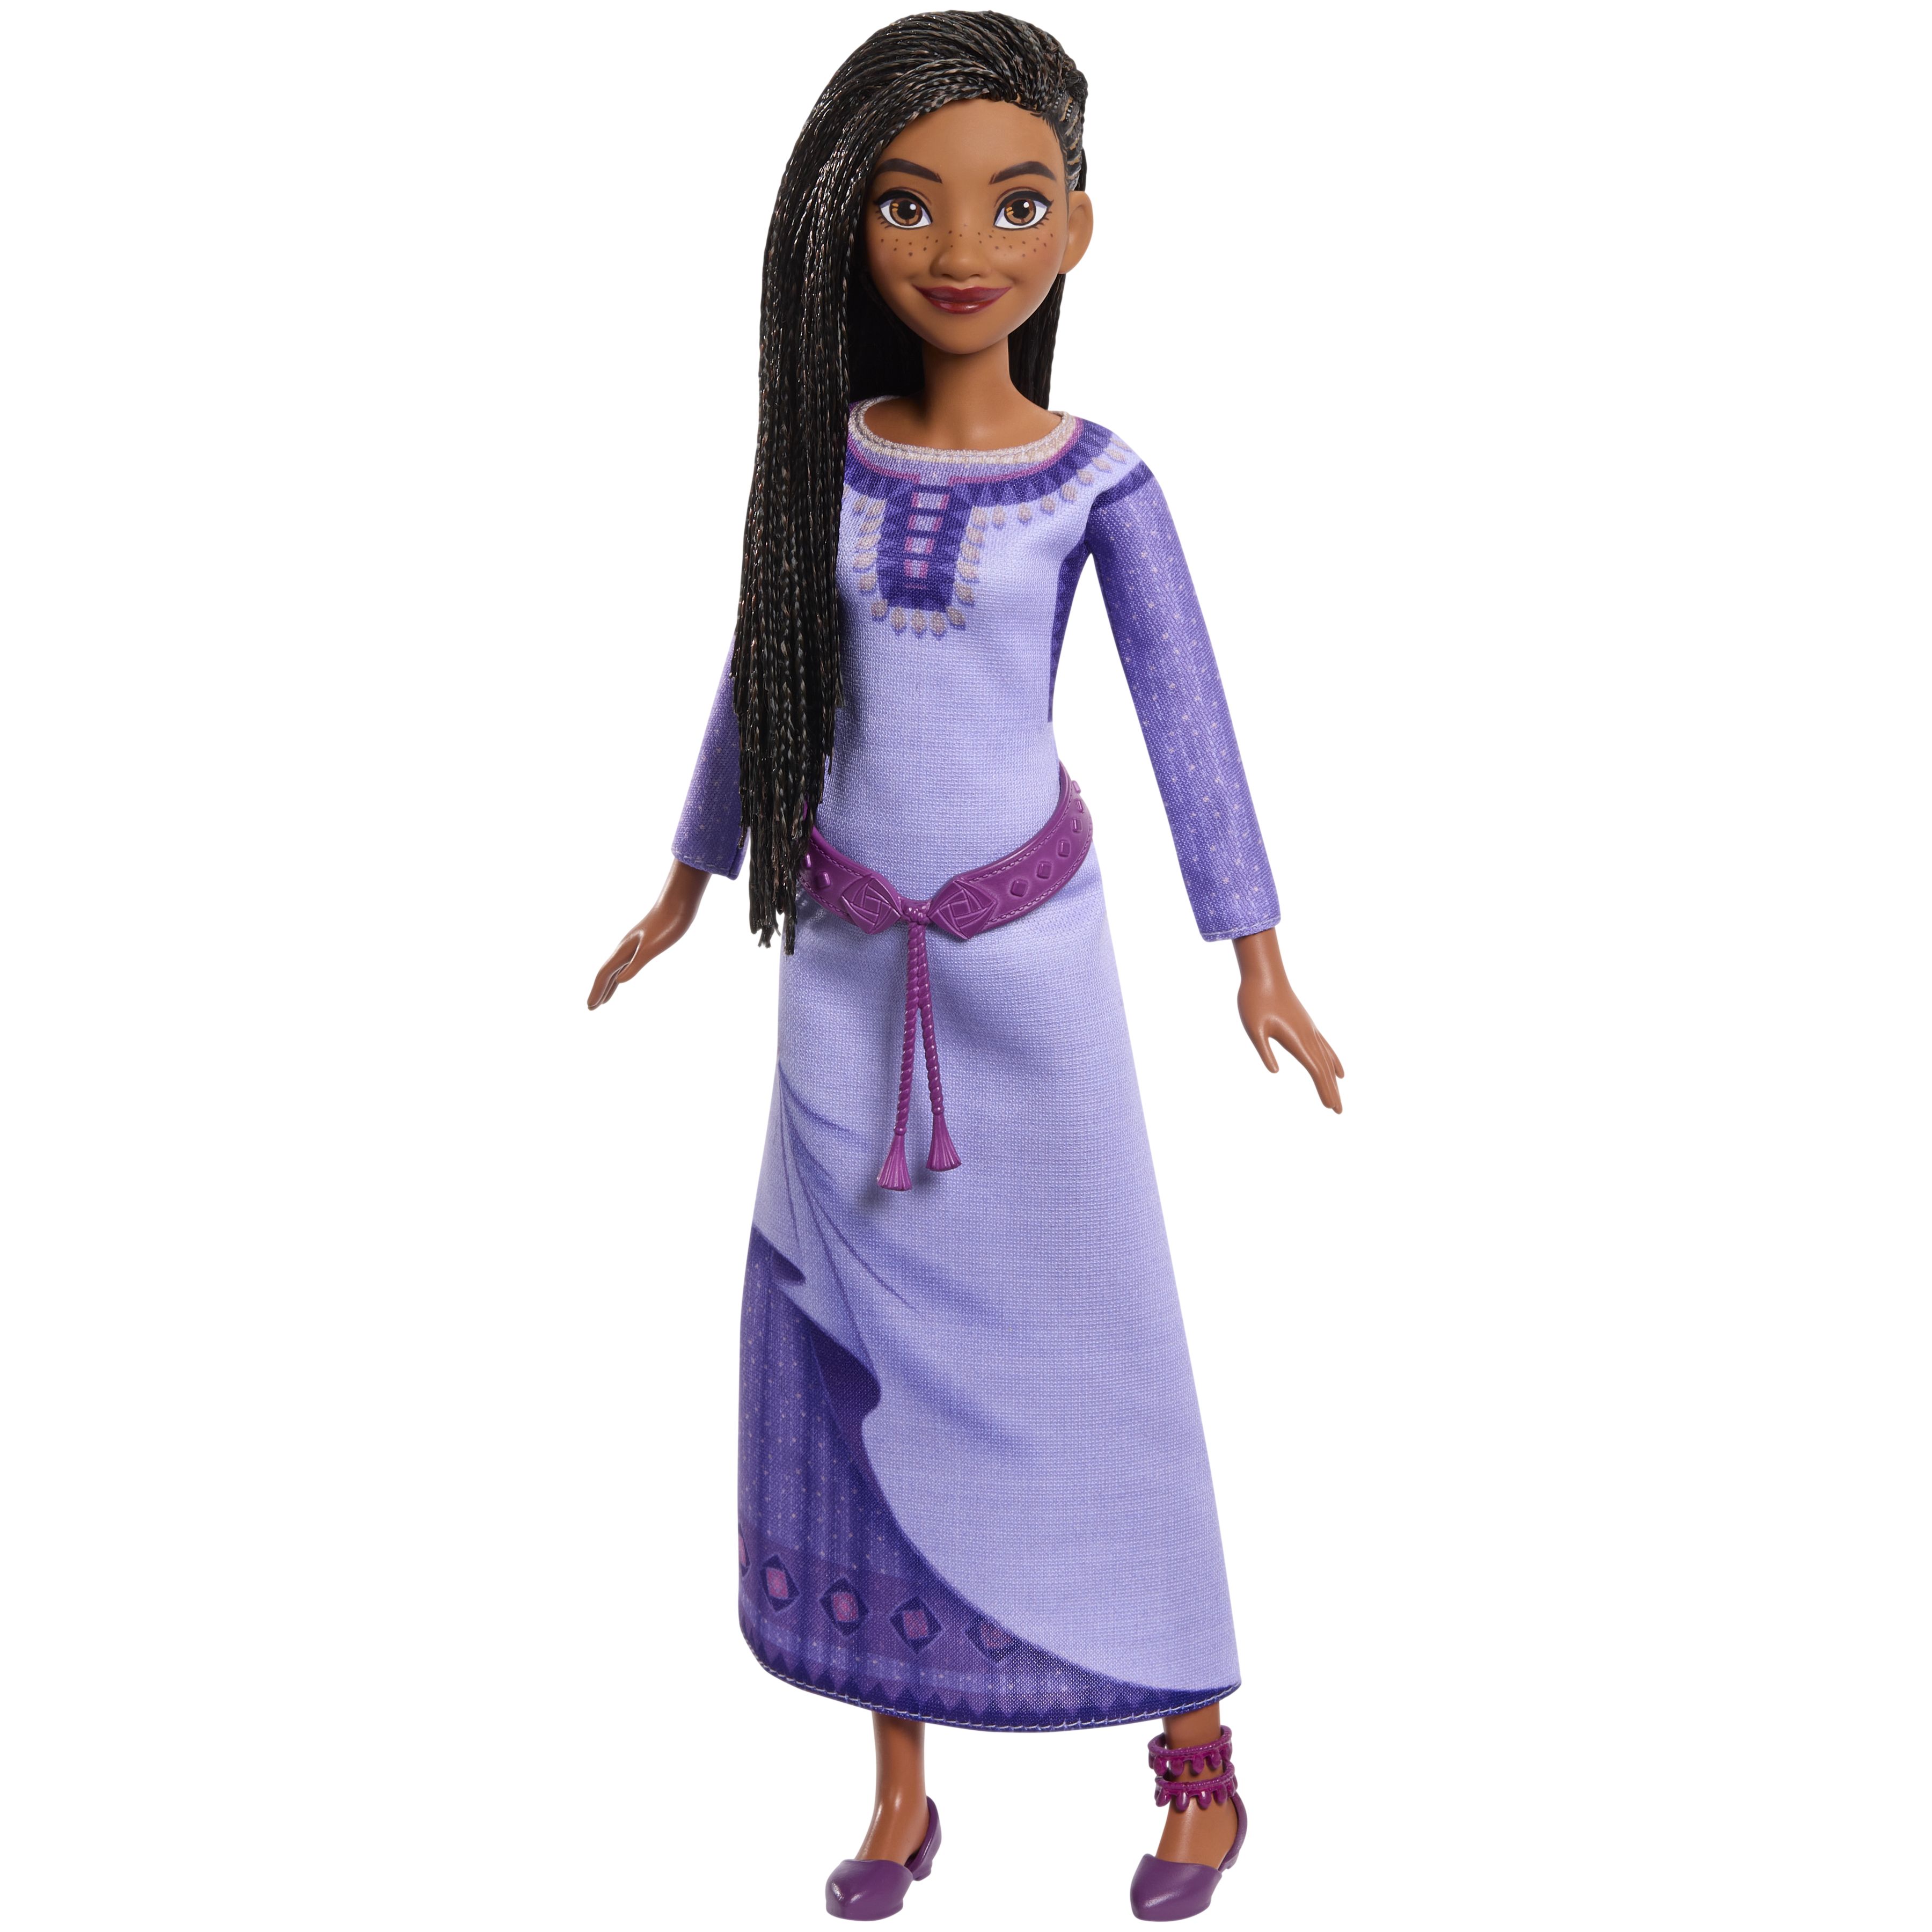 Disney Wish Doll - Asha » New Styles Every Day » Fashion Online